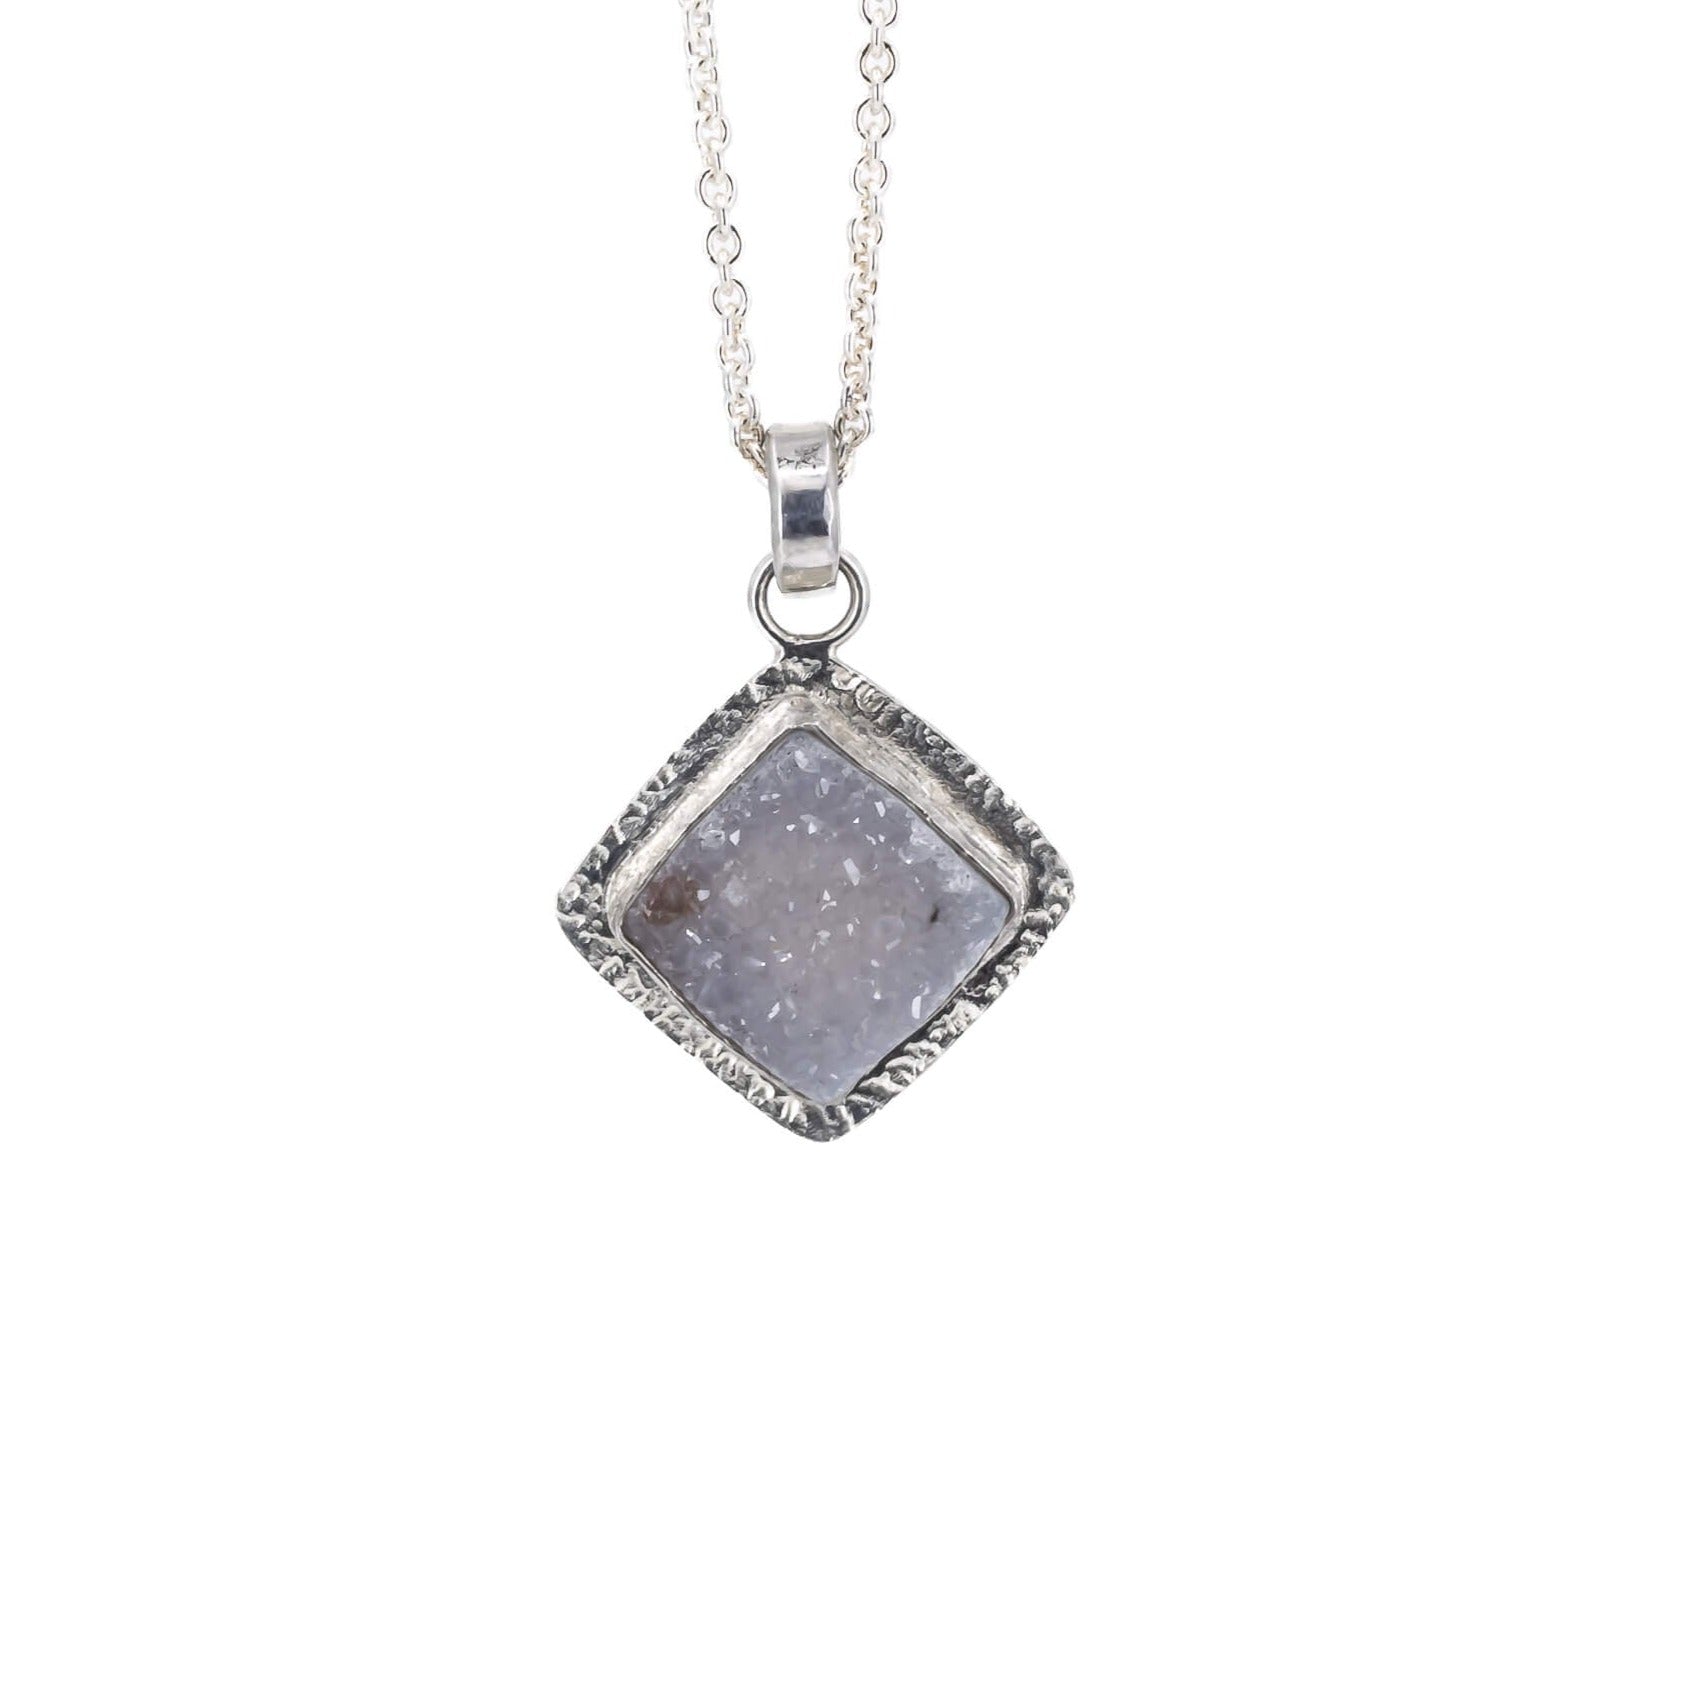 Square lavender druzy pendant necklace in sterling silver